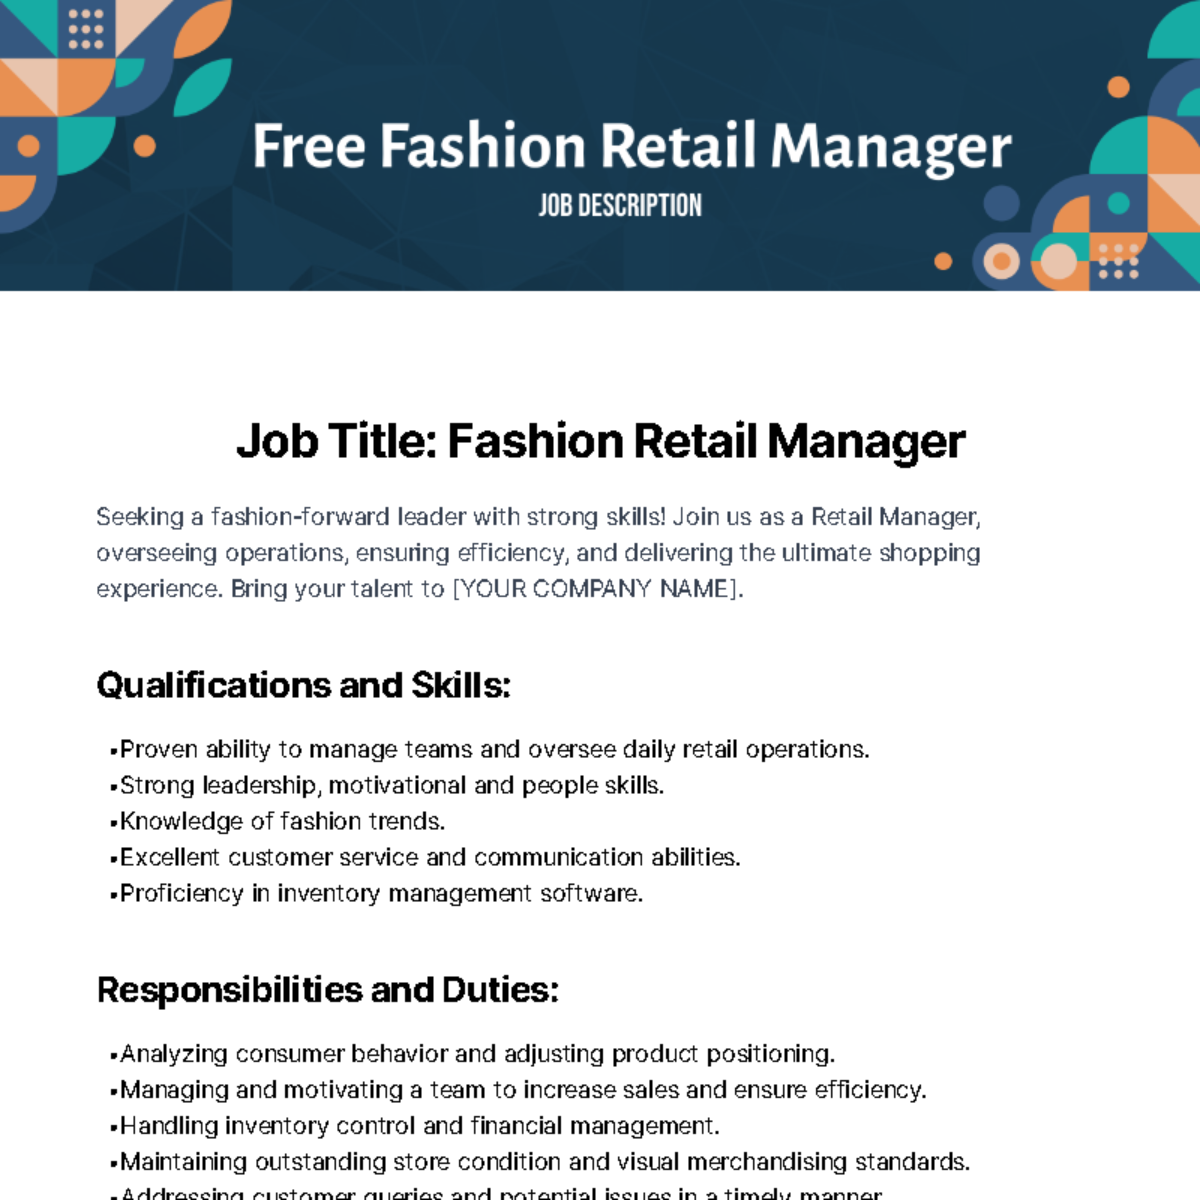 Free Fashion Retail Manager Job Description Template